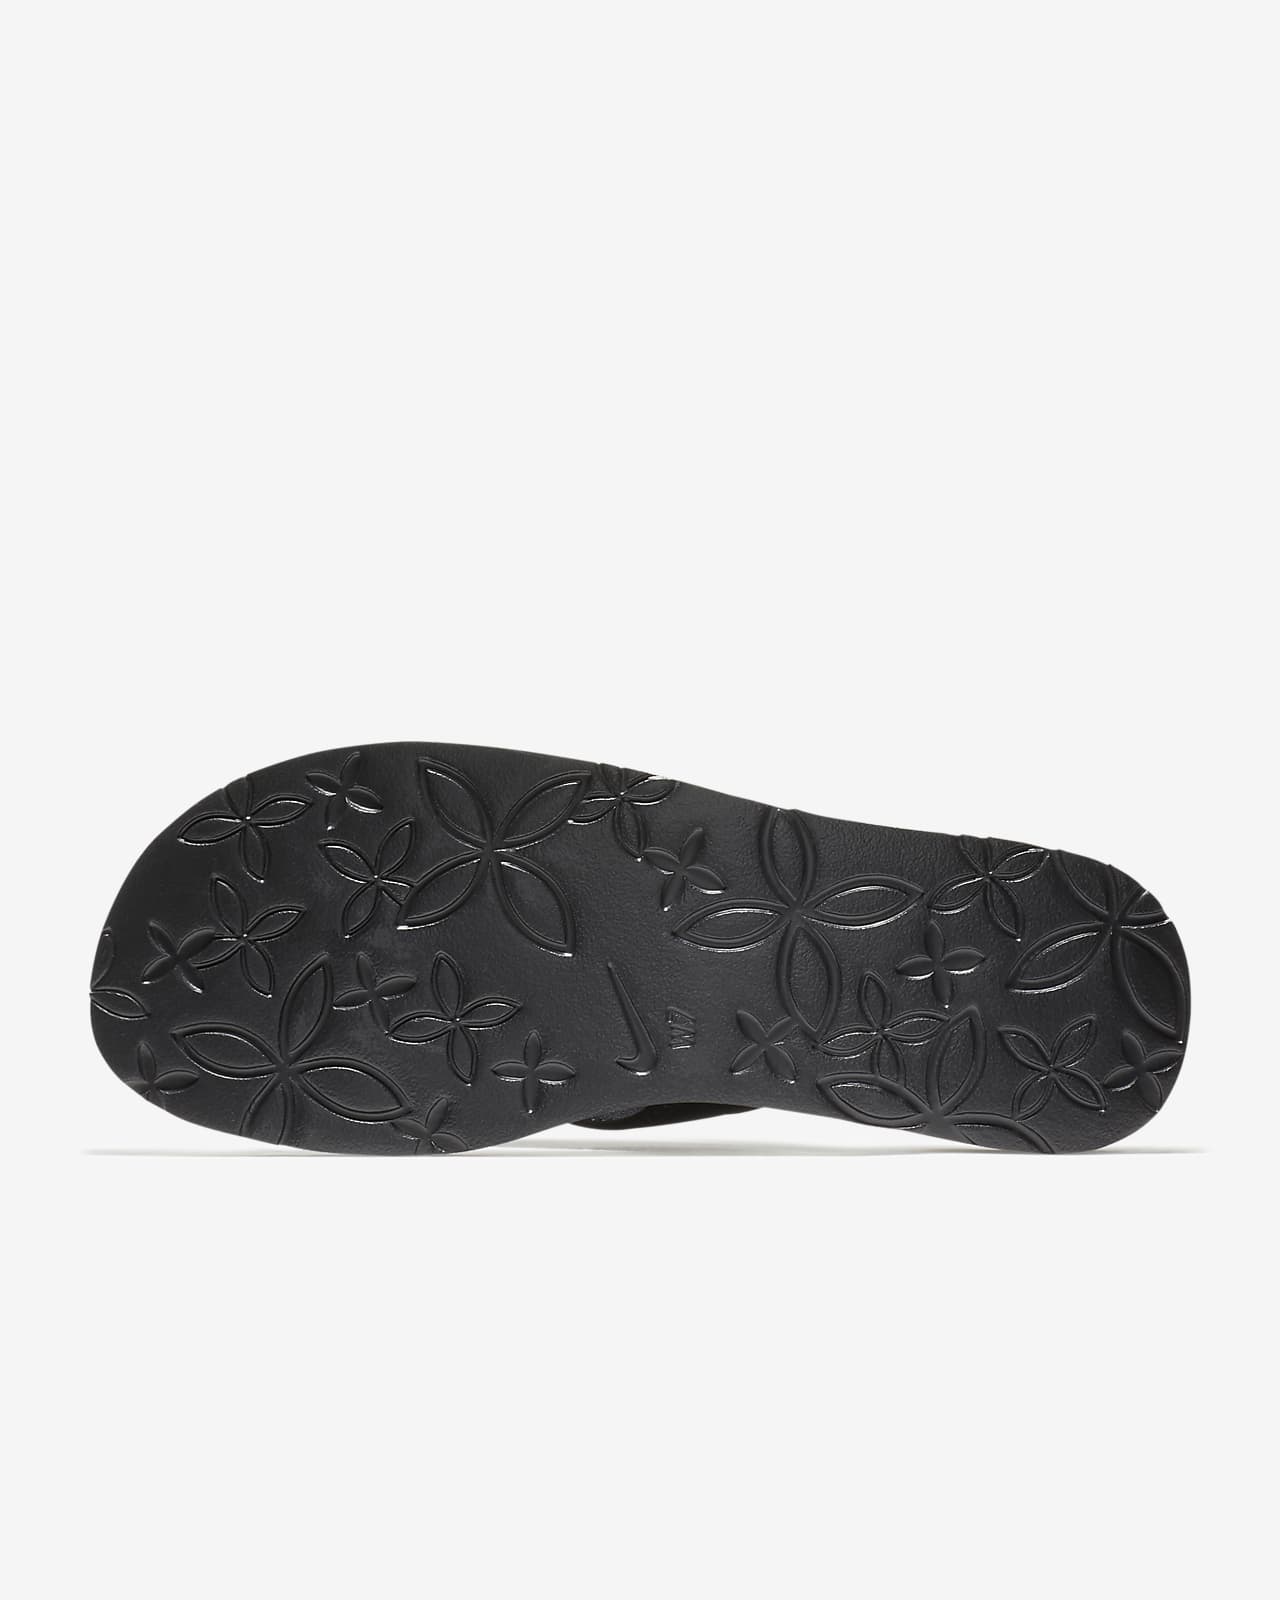 Nike Celso 314870-011 Thong Flip Flop Sandals Women's Size 7 Black